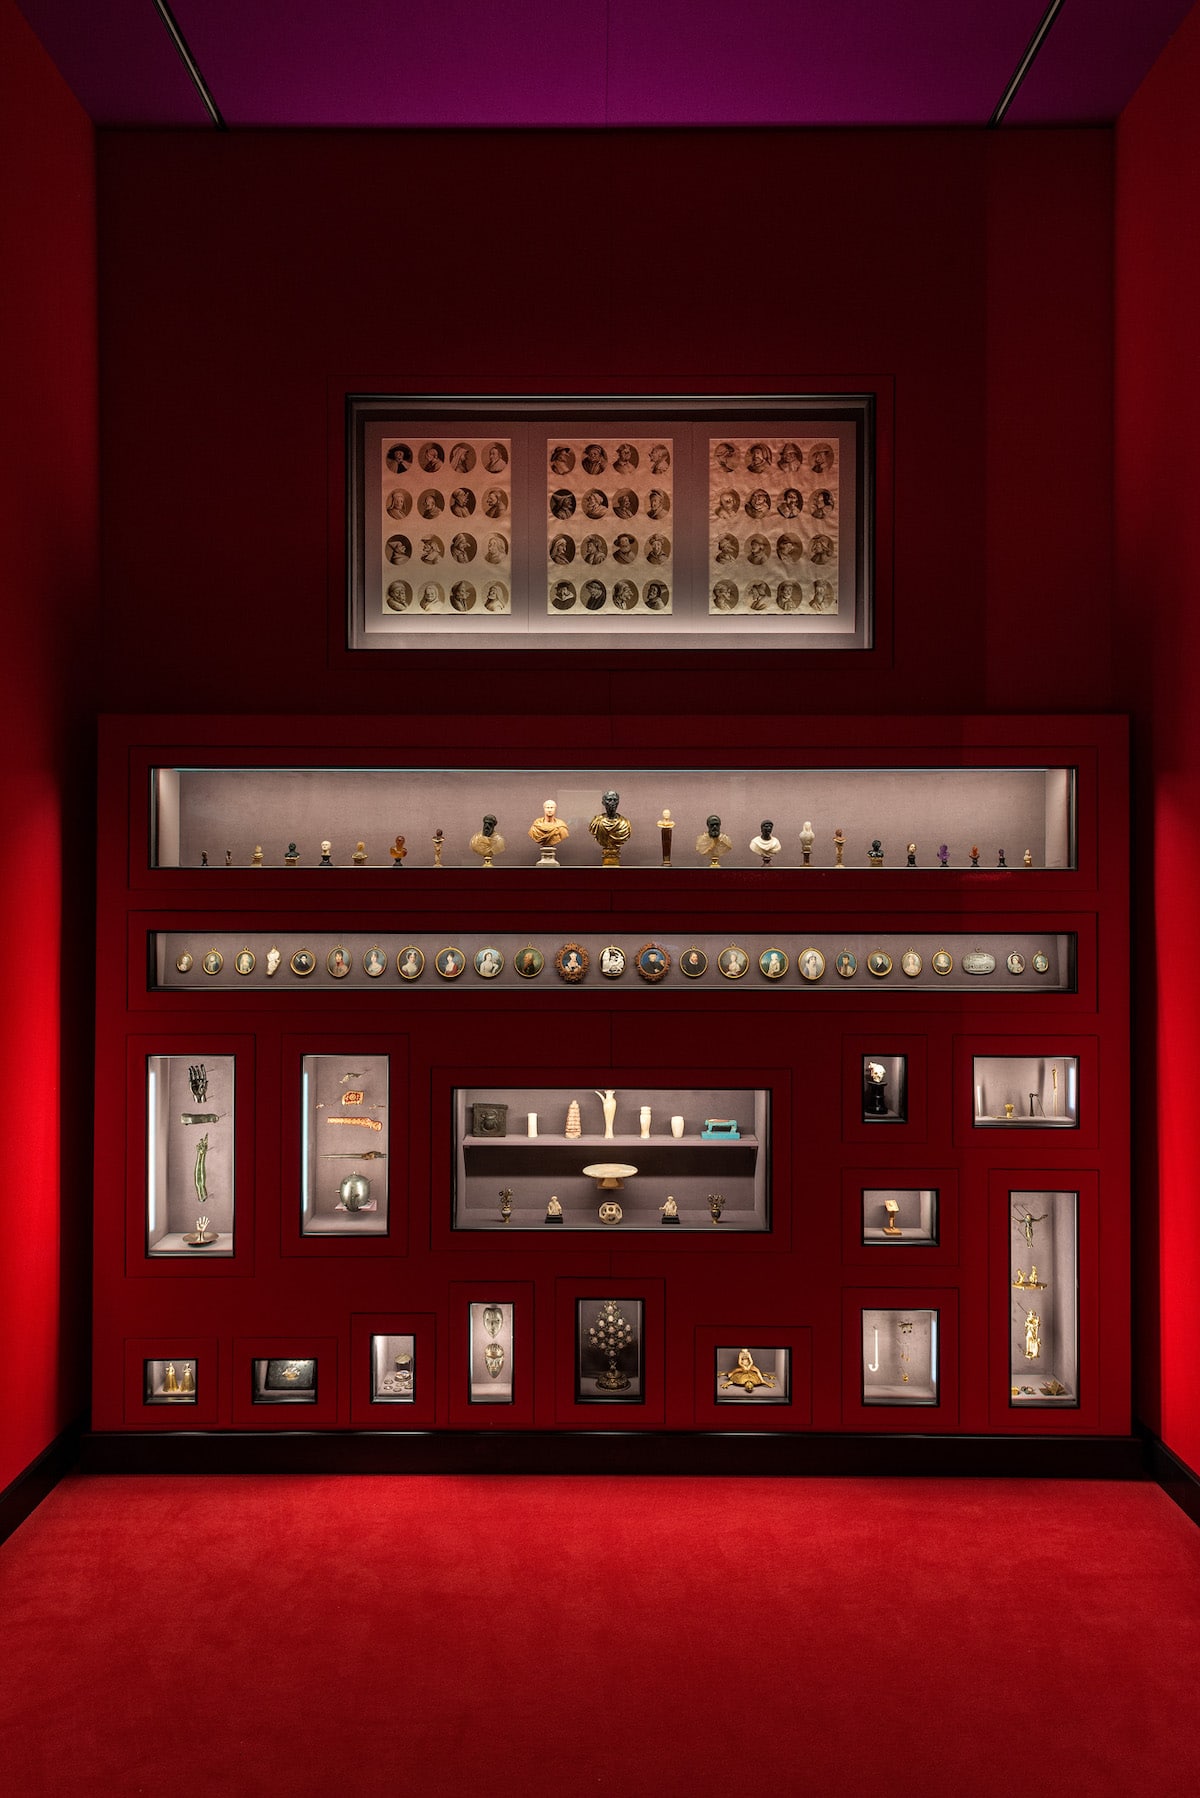 Exposición de Arte de Wes Anderson en Kunsthistorisches Museum Wien